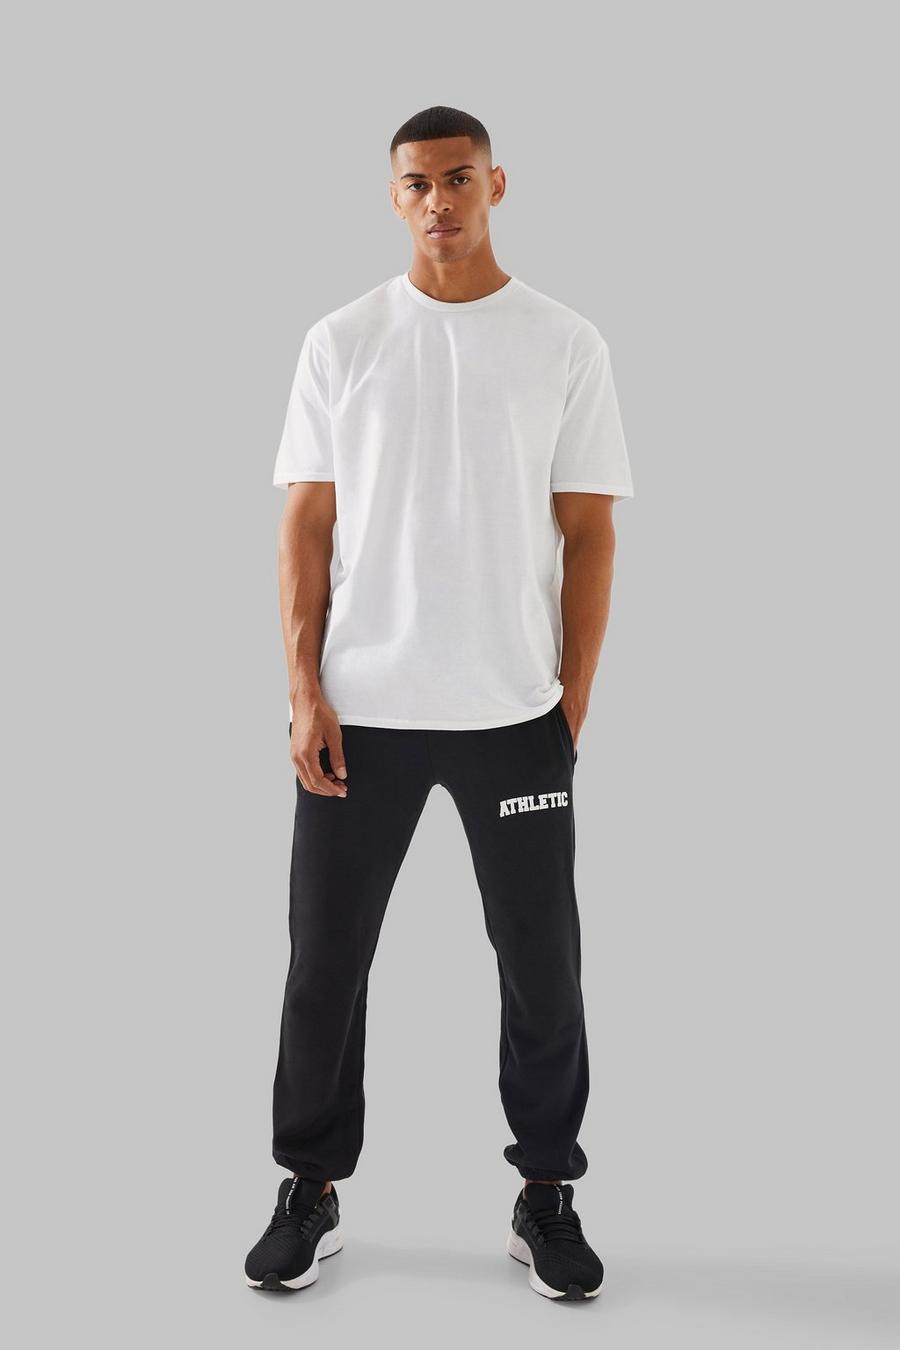 Oversize Trainingsanzug mit Man Active Athletic Print, White blanc